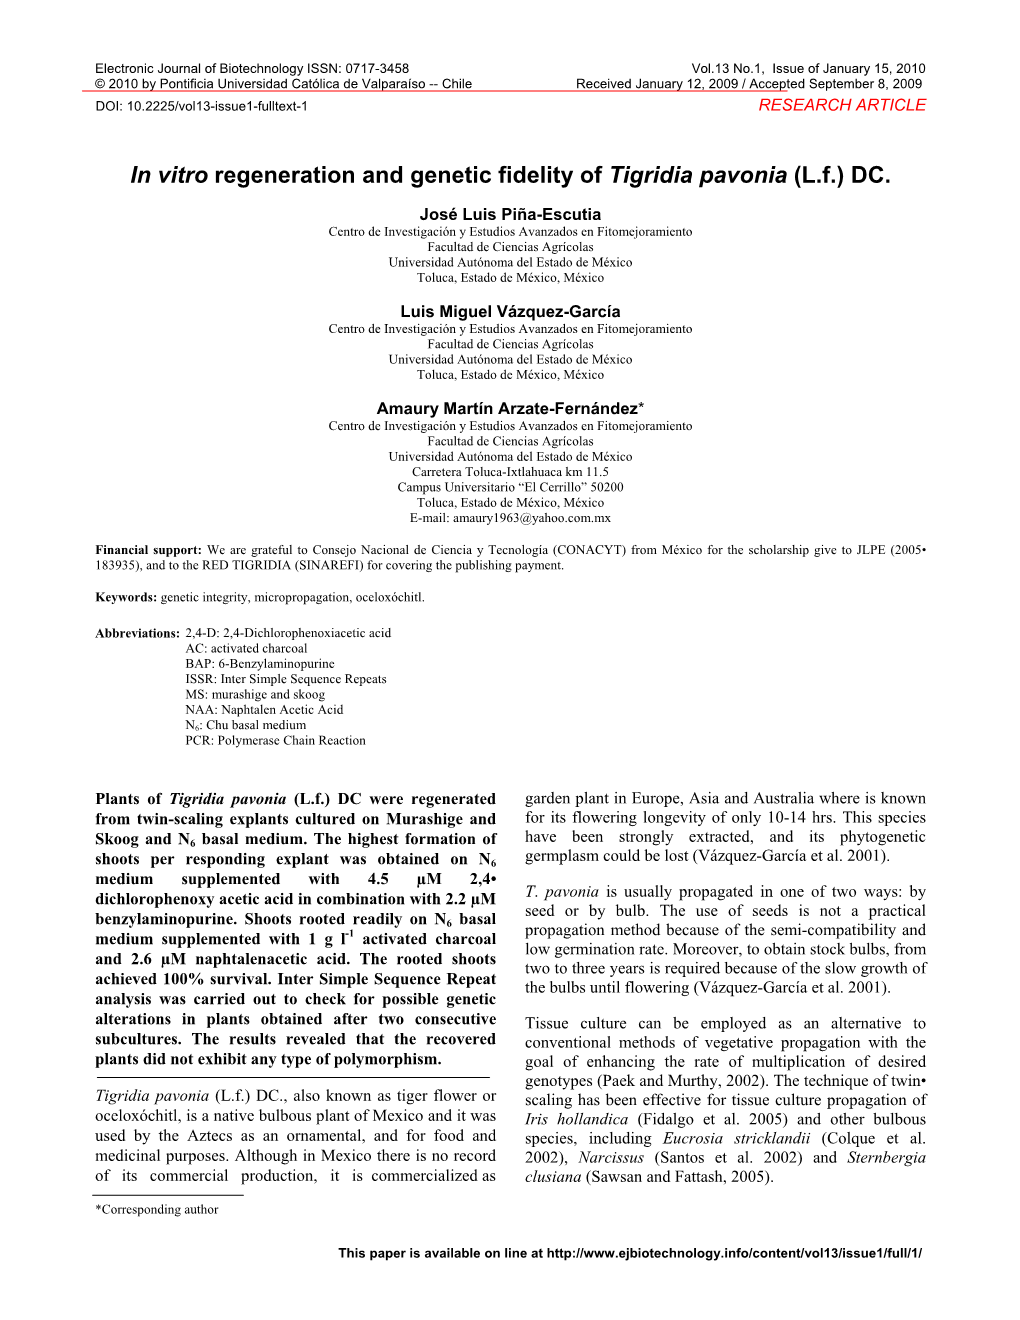 In Vitro Regeneration and Genetic Fidelity of Tigridia Pavonia (L.F.) DC